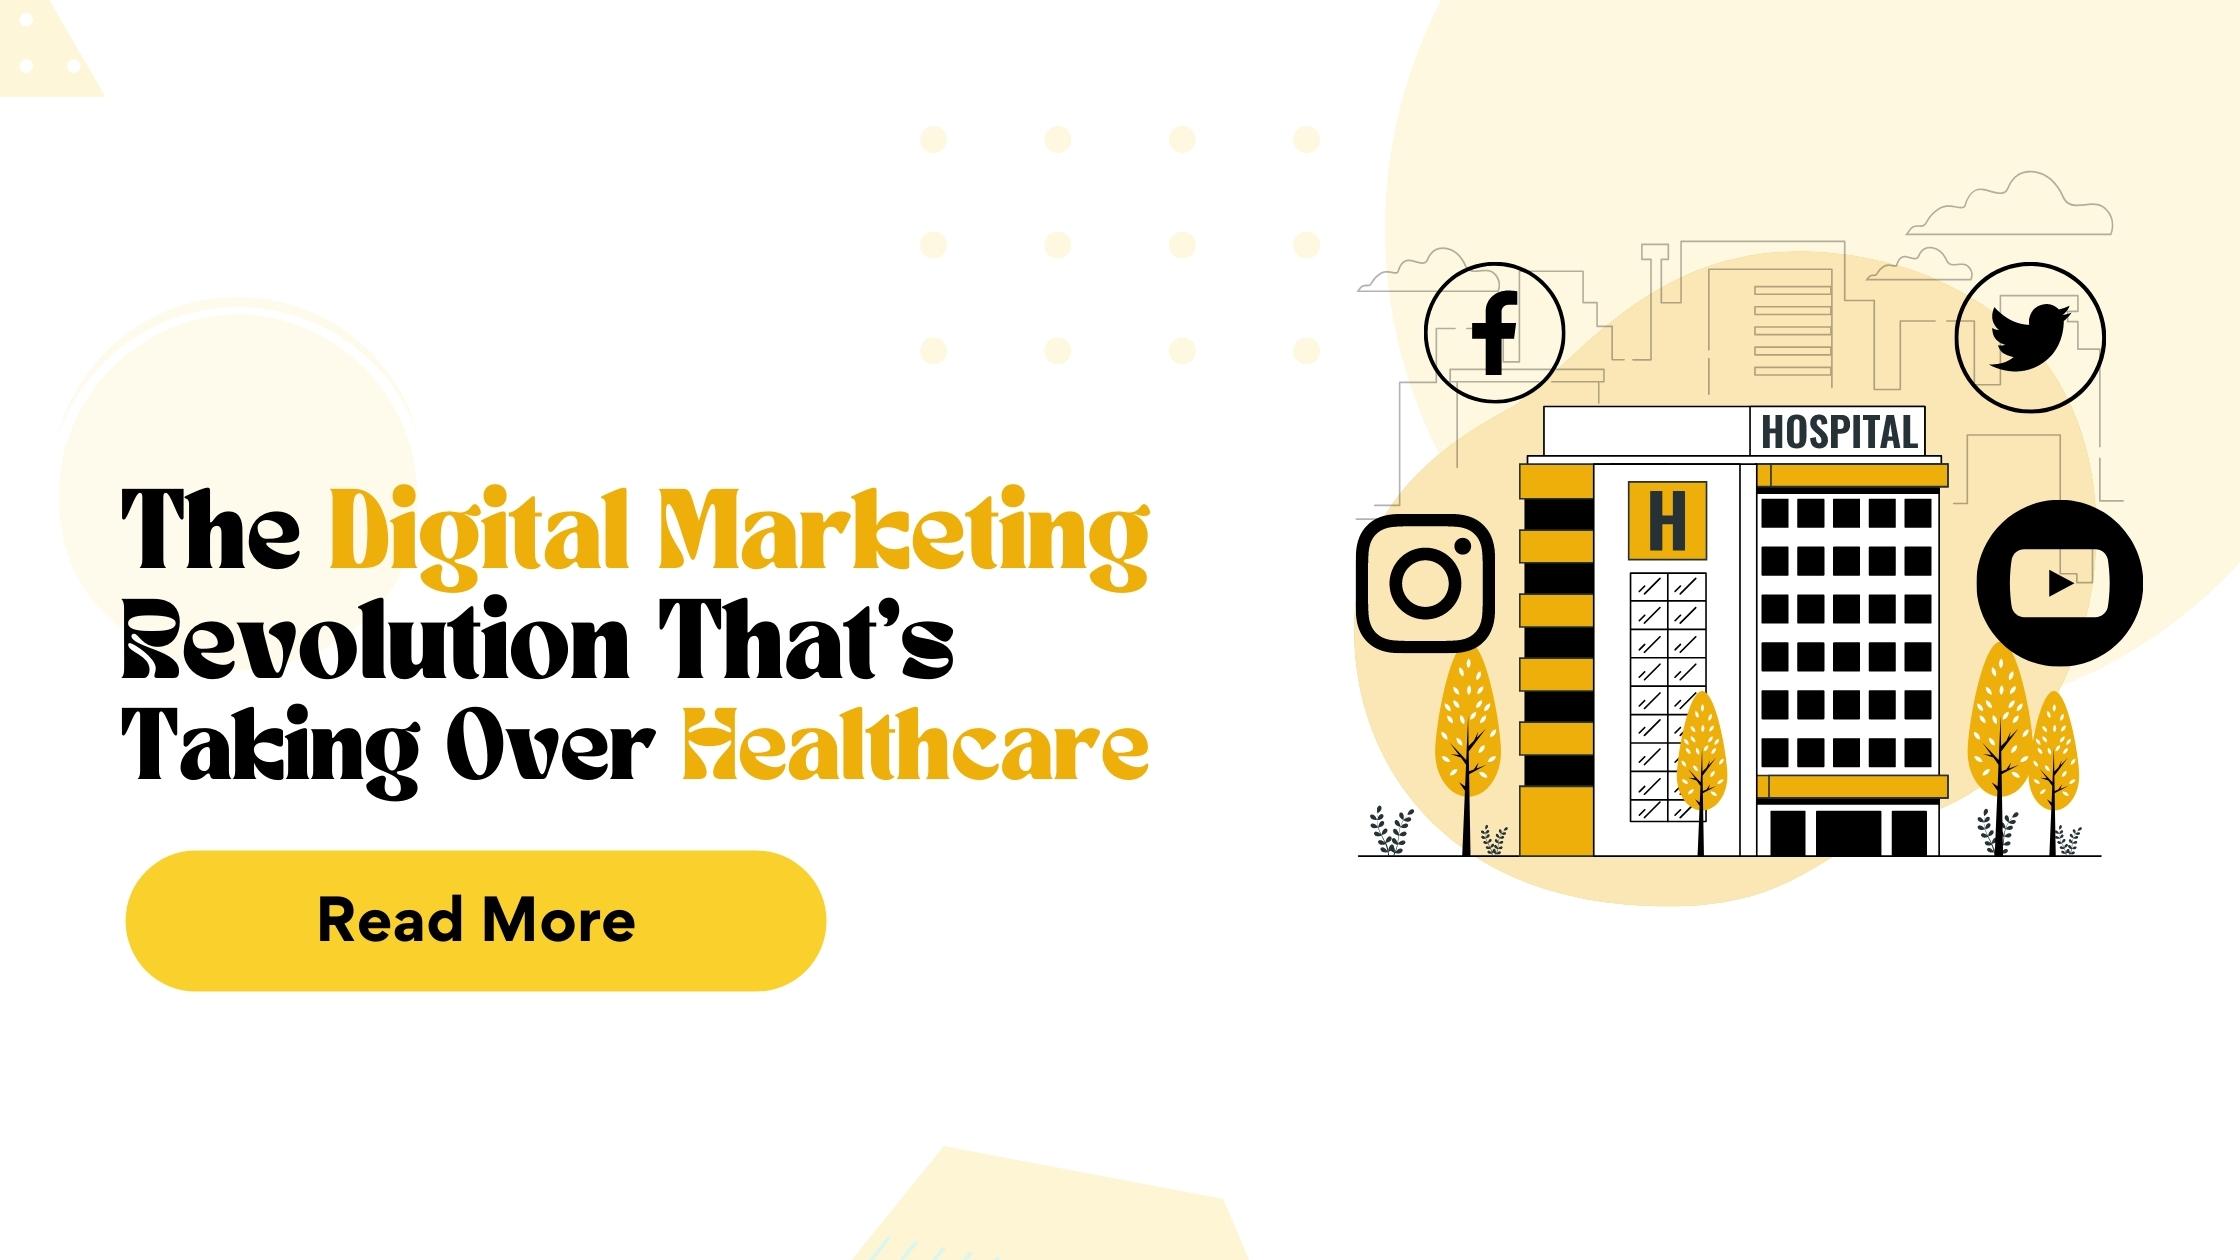 The Digital Marketing Revolution That's Taking Over Healthcare